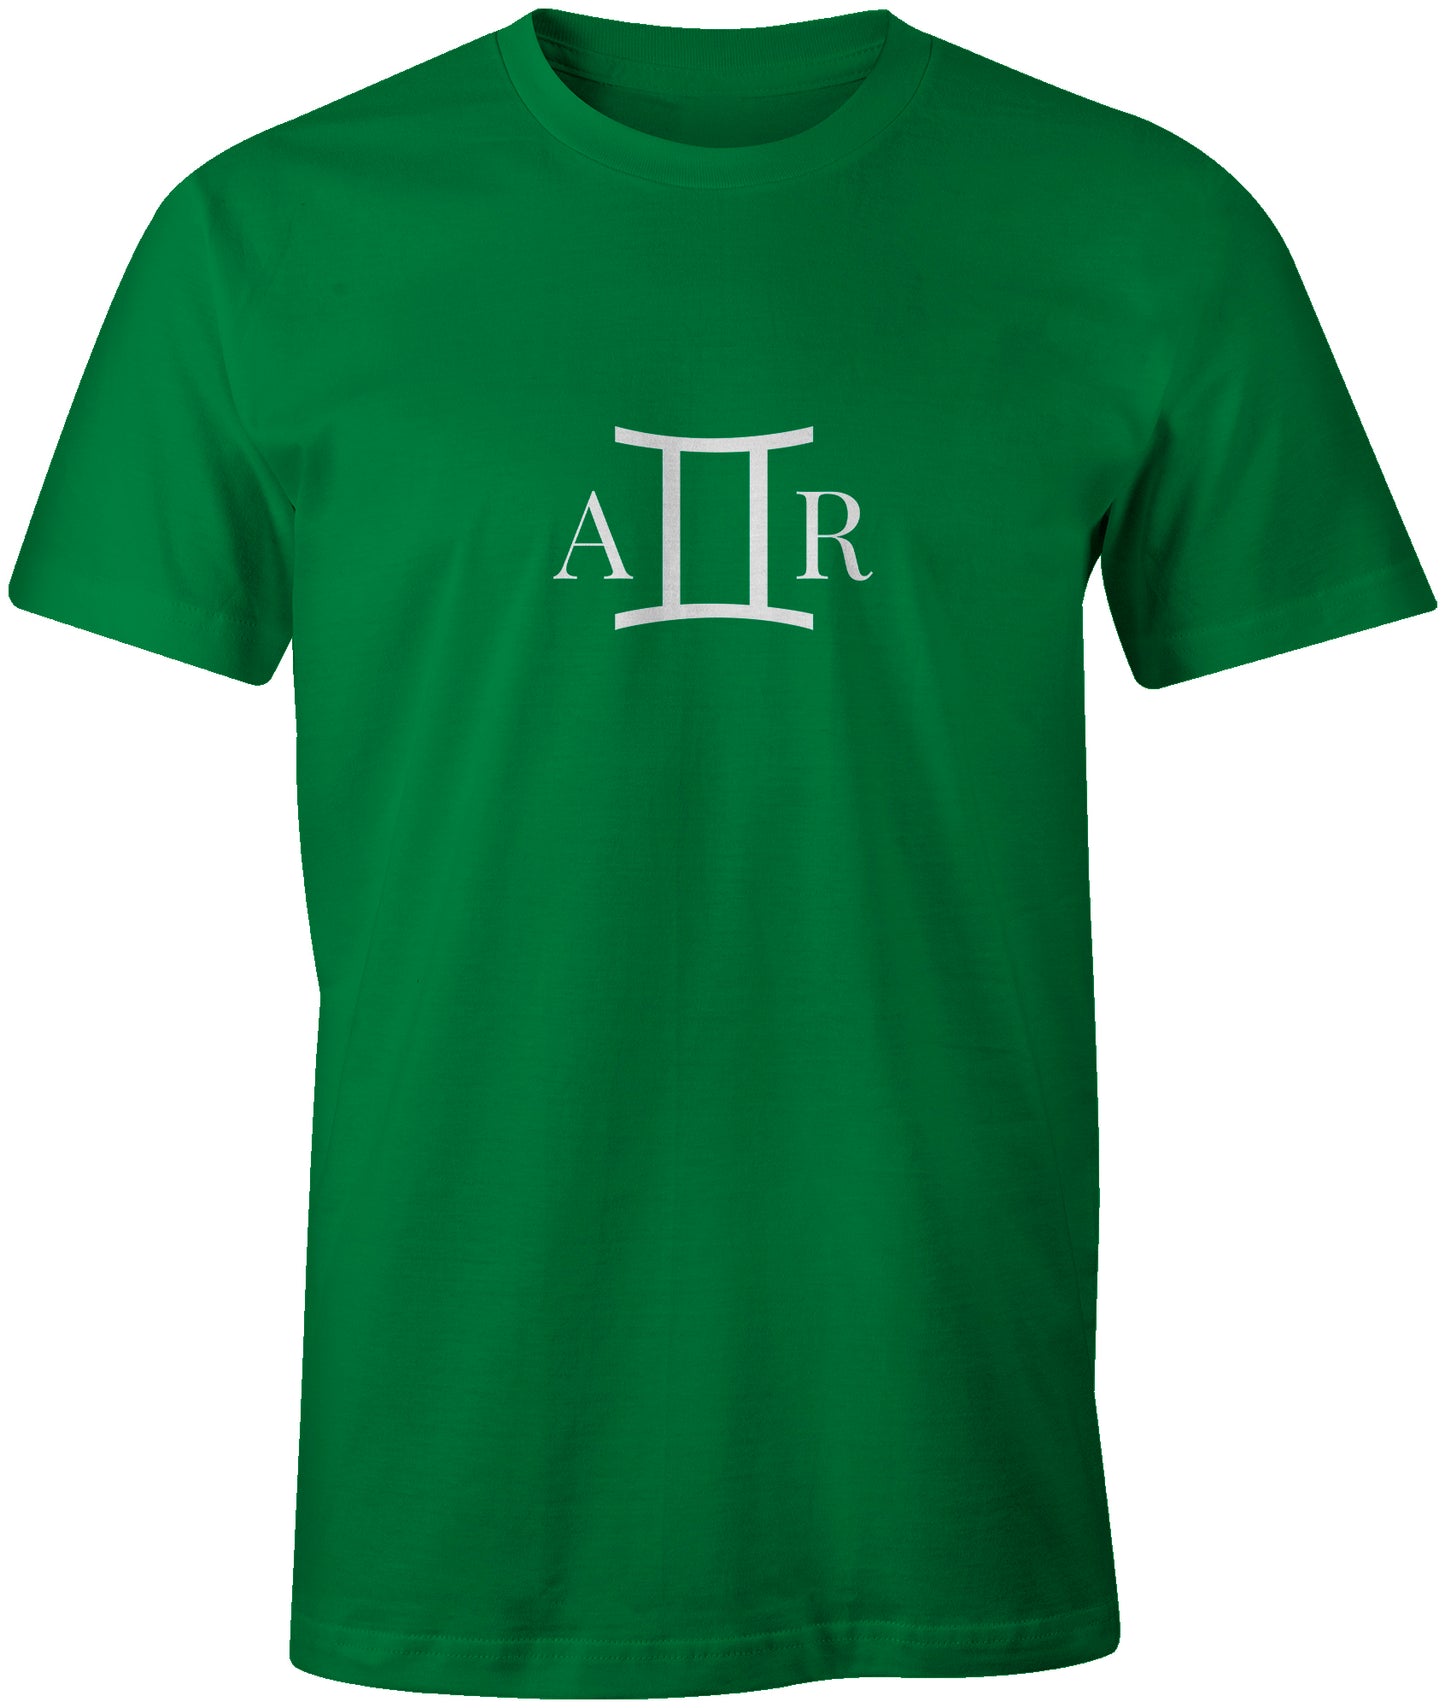 The AR Brand Green T-Shirt